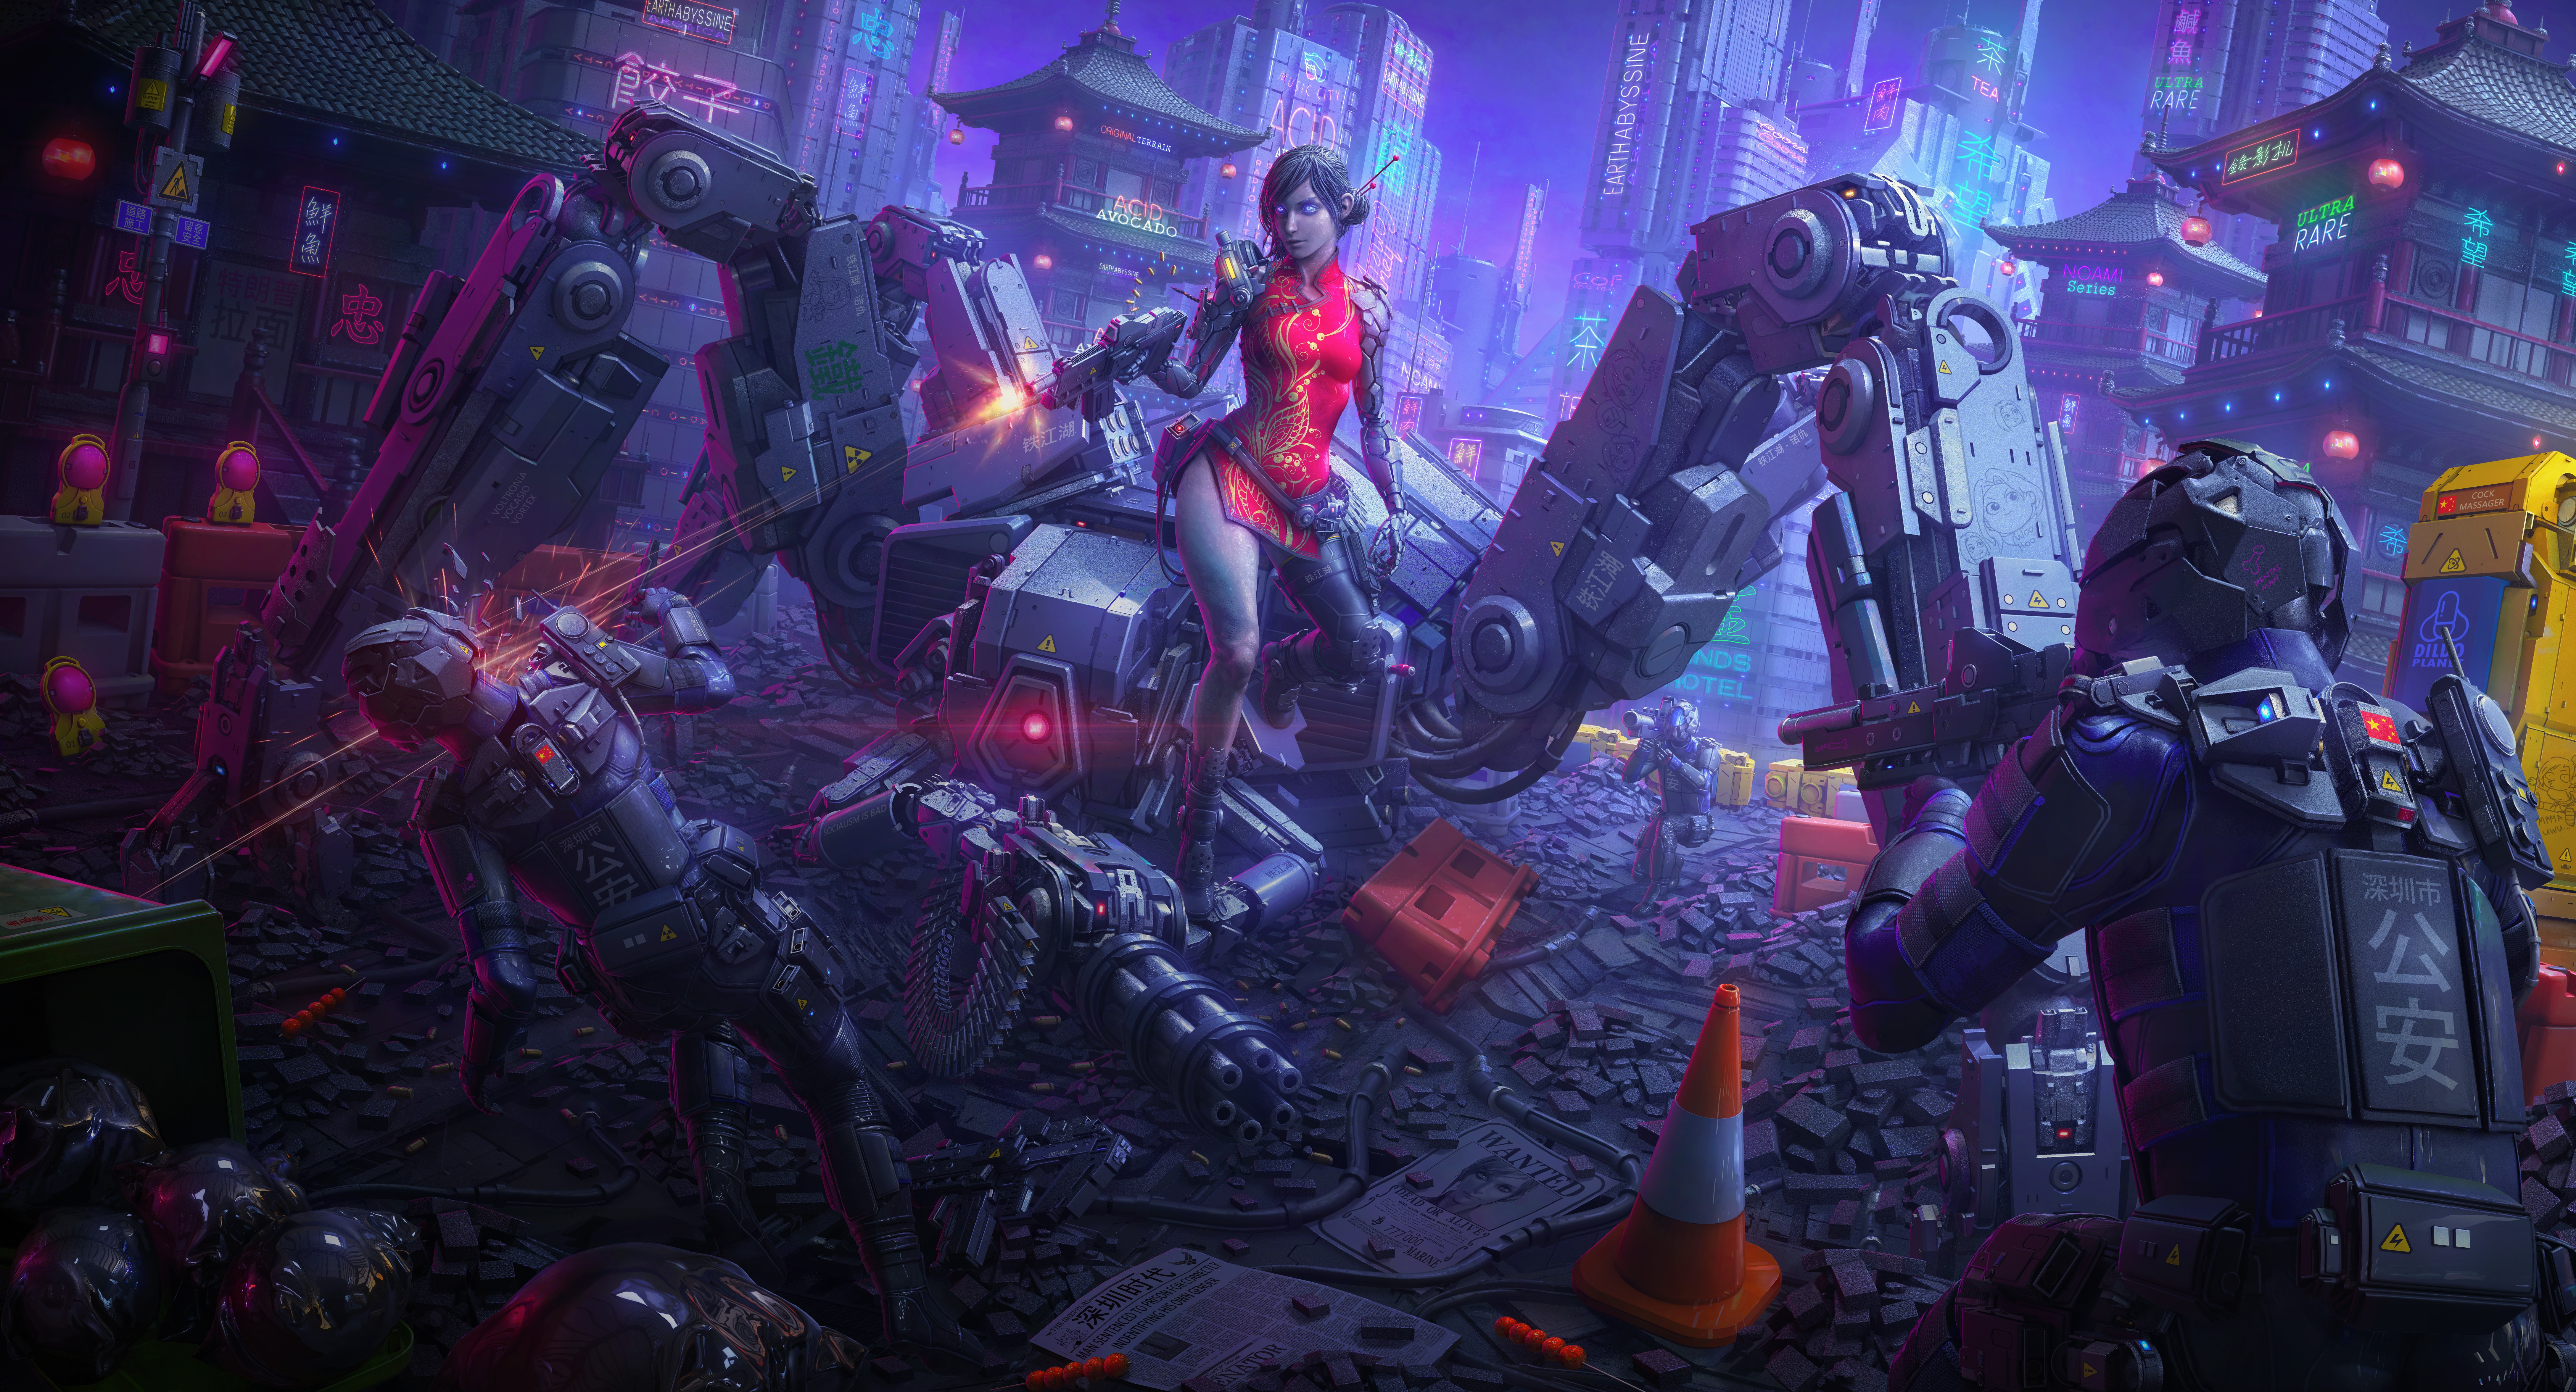 Futuristic Science Fiction Women Cyborg Soldier Exoskeleton Battle Mech Robot Weapon Submachine Gun  8704x4705